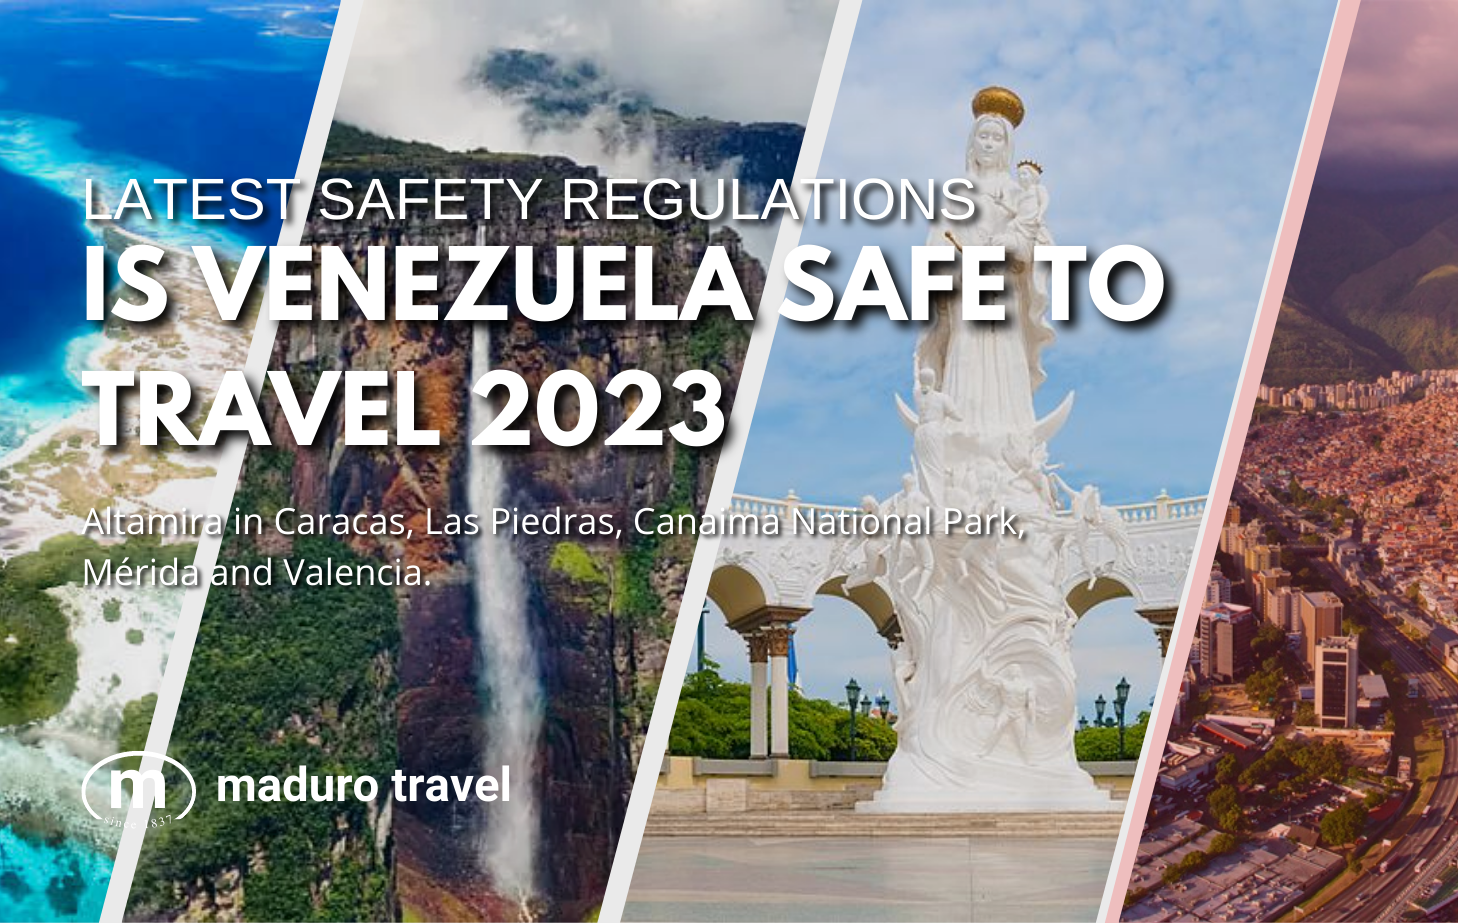 travel restrictions venezuela